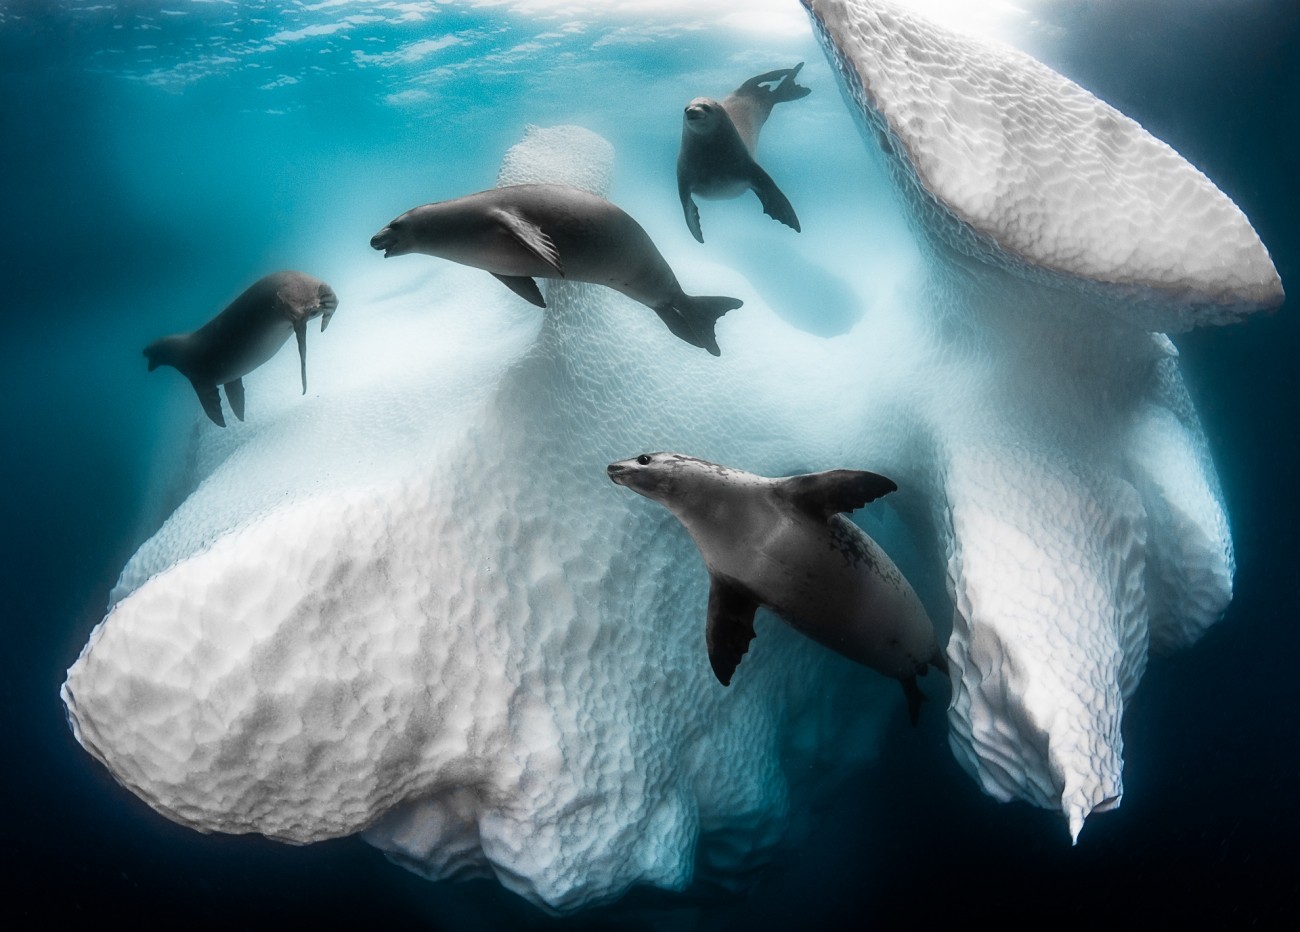 Фото года 2020. Айсберг – место обитания морской жизни. Автор Грег Лекур